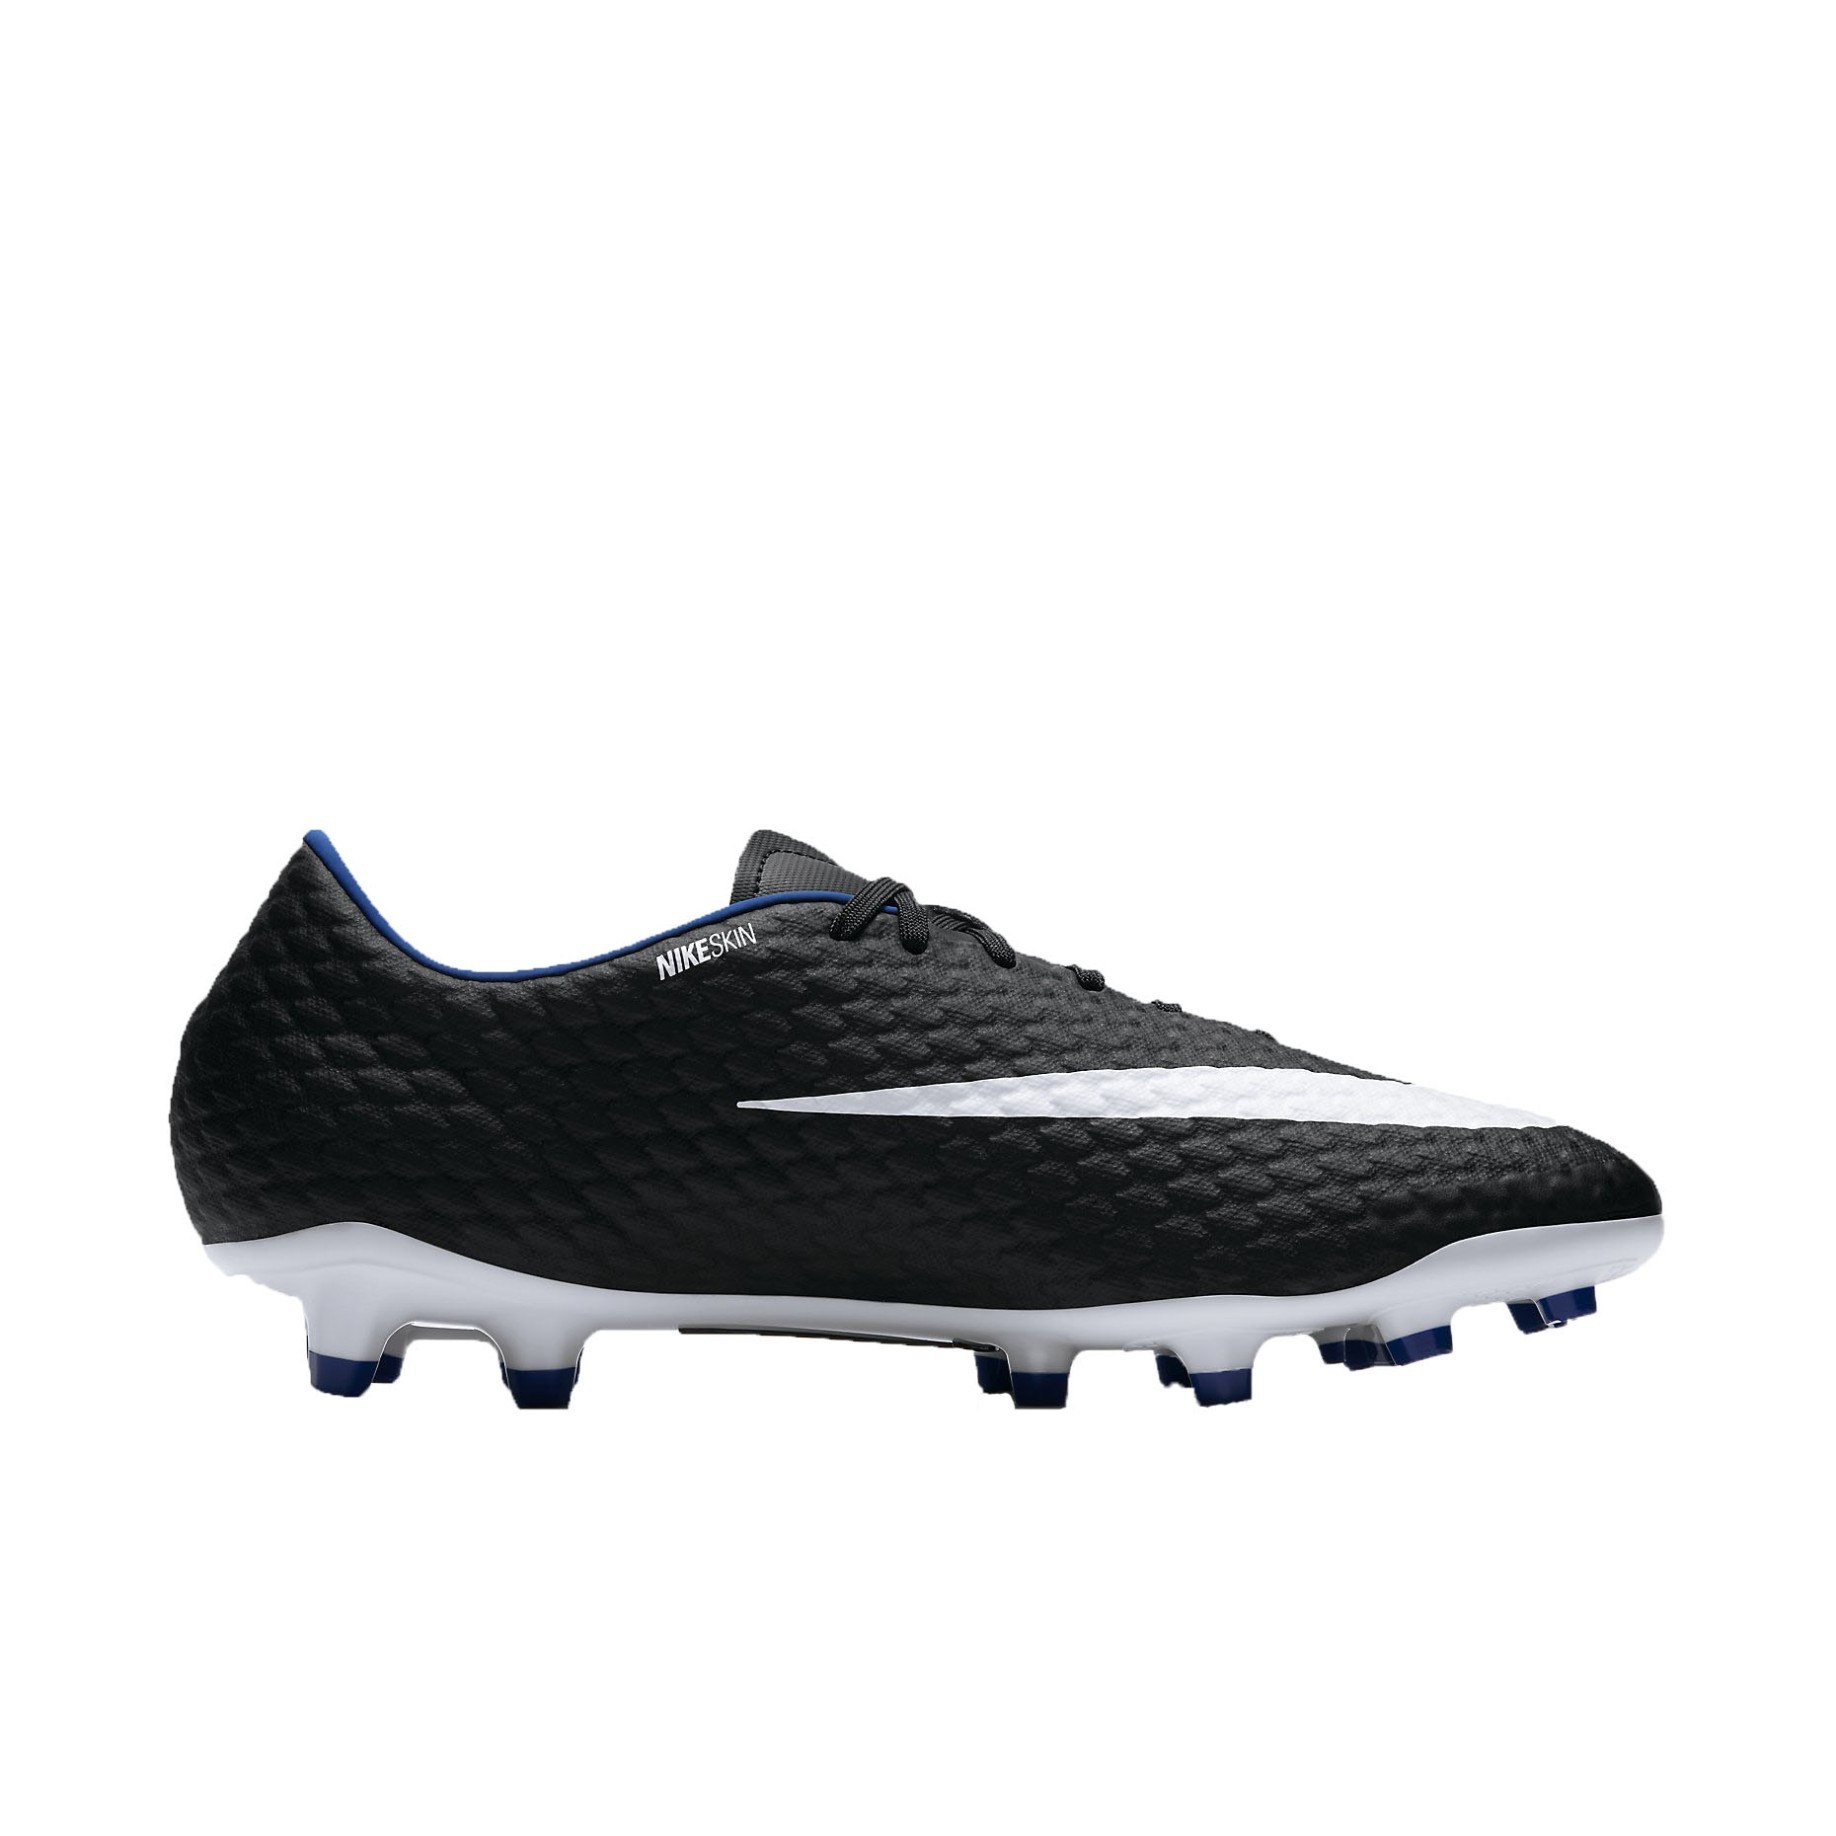 Evaluable Instalar en pc Virgen Zapatos de fútbol Nike Hypervenom Phelon FG III colore negro azul - Nike -  SportIT.com